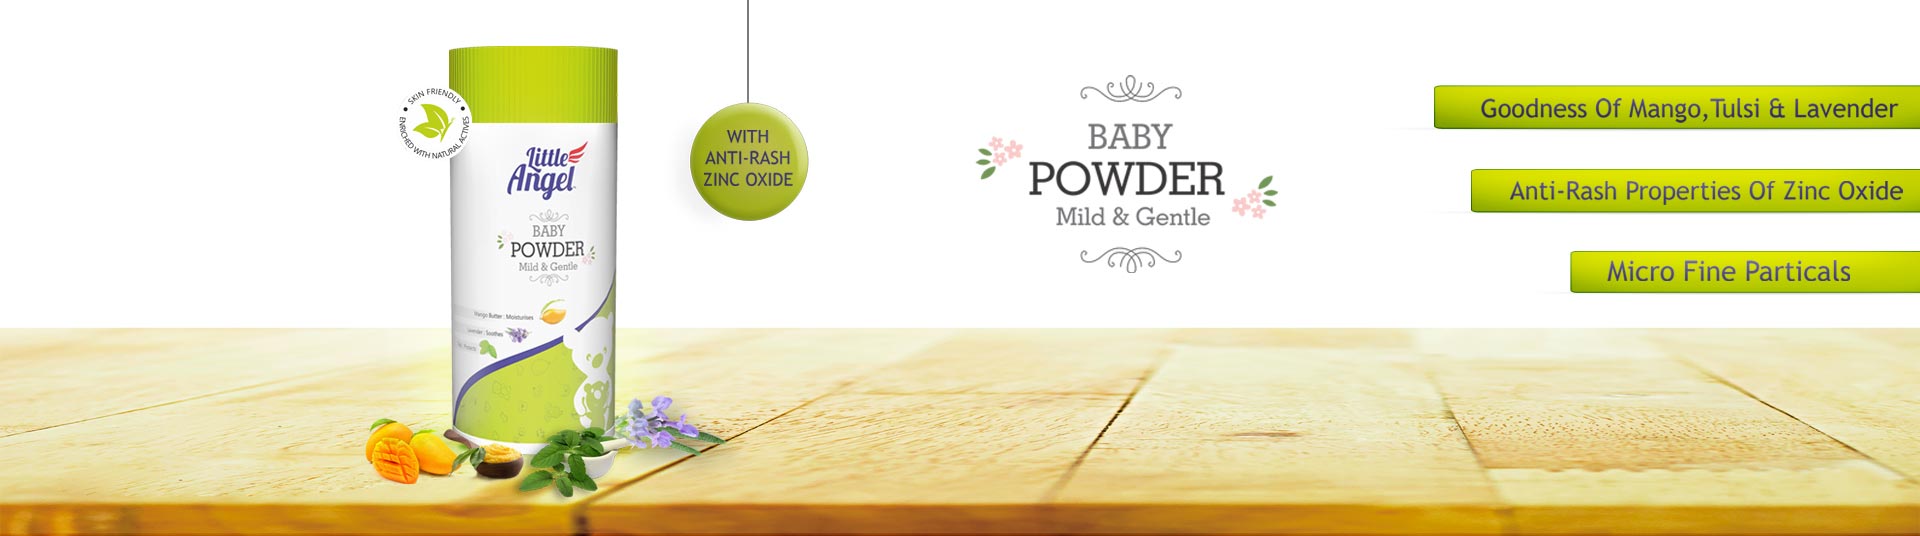 Baby Powder, Baby Powder :: Little Angel